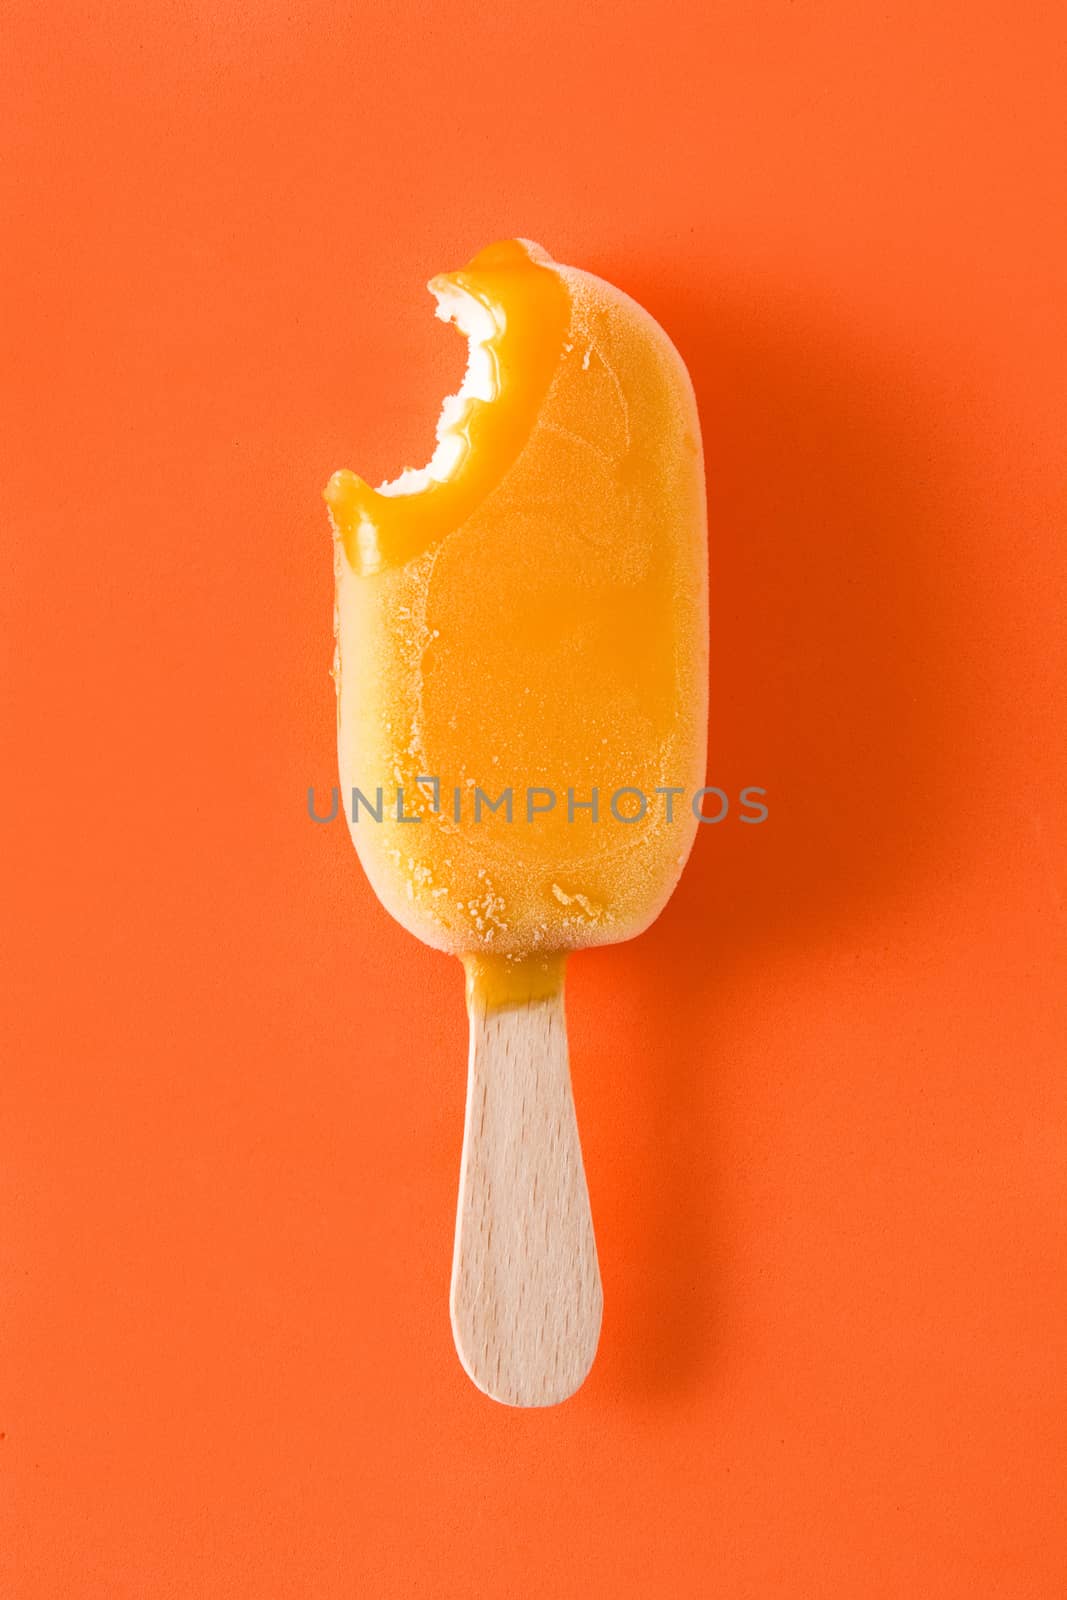 Orange popsicles on orange background by chandlervid85